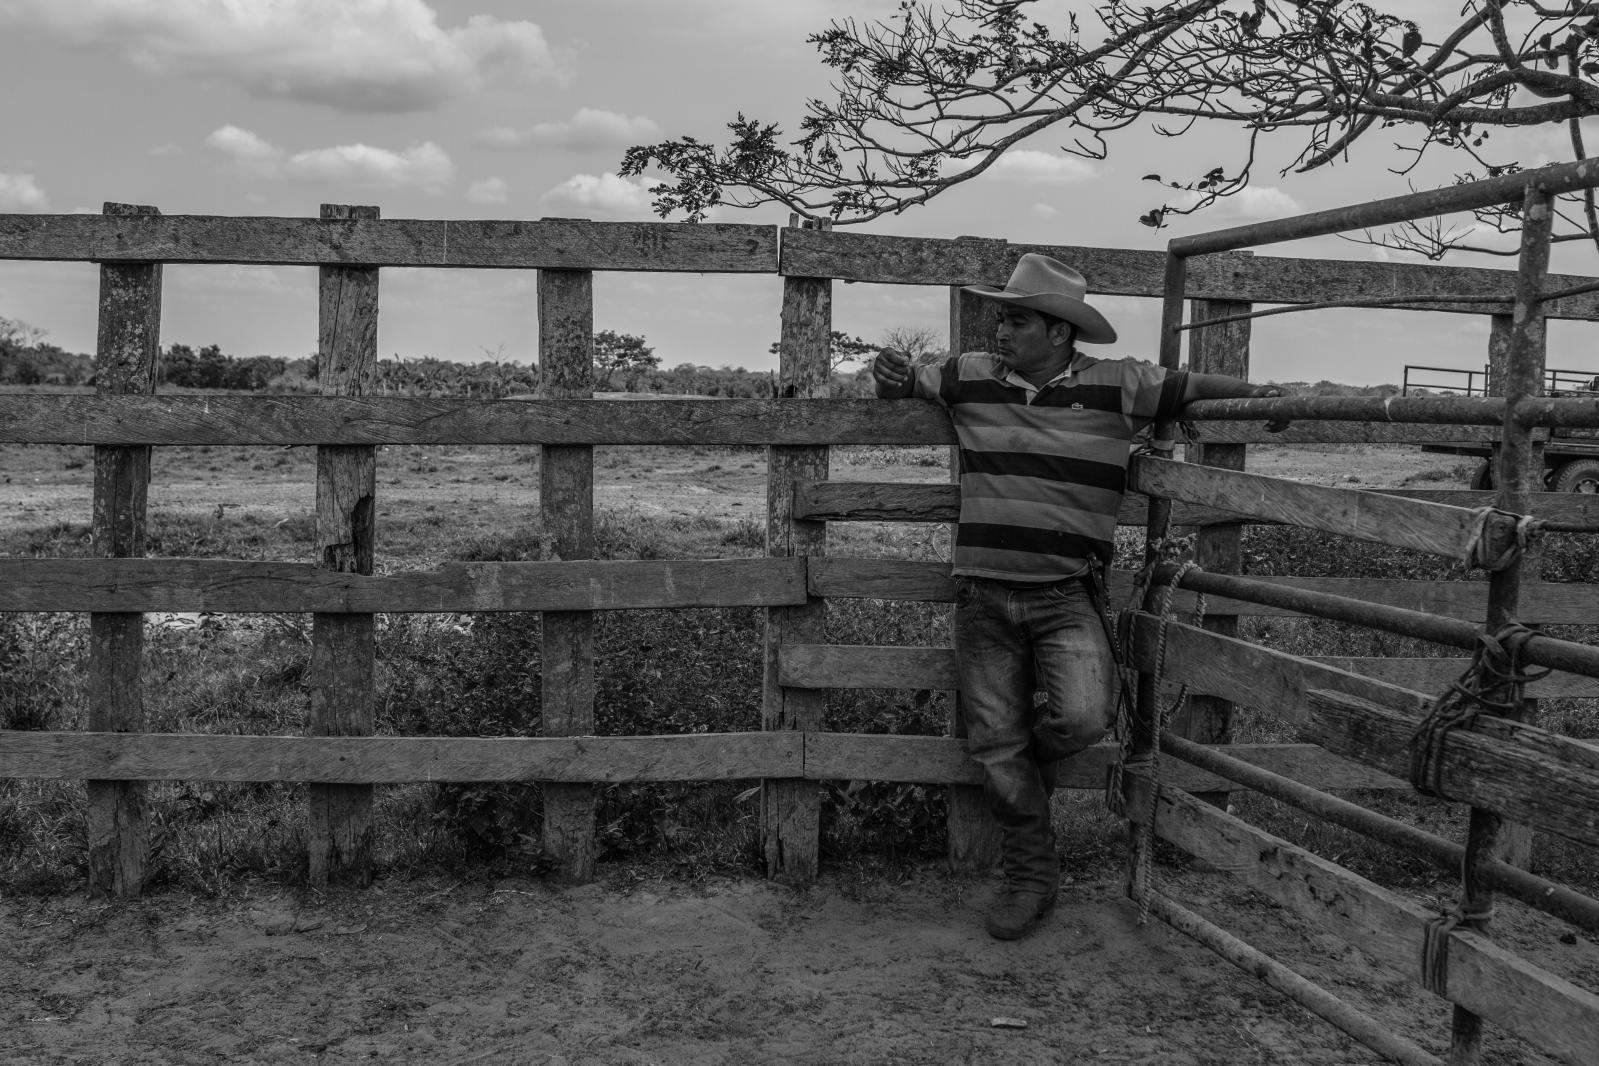 Llaneros Preserve Centuries-old Cattle Ranching Tradition near Venezuelan Border